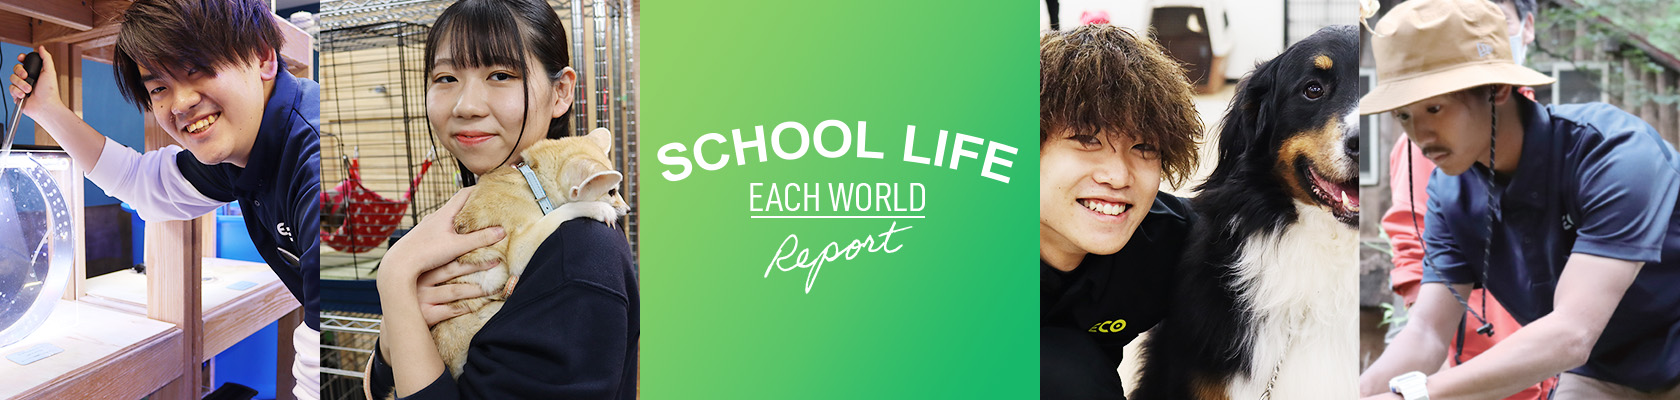 SCHOOL LIFE EACH WORLD Report